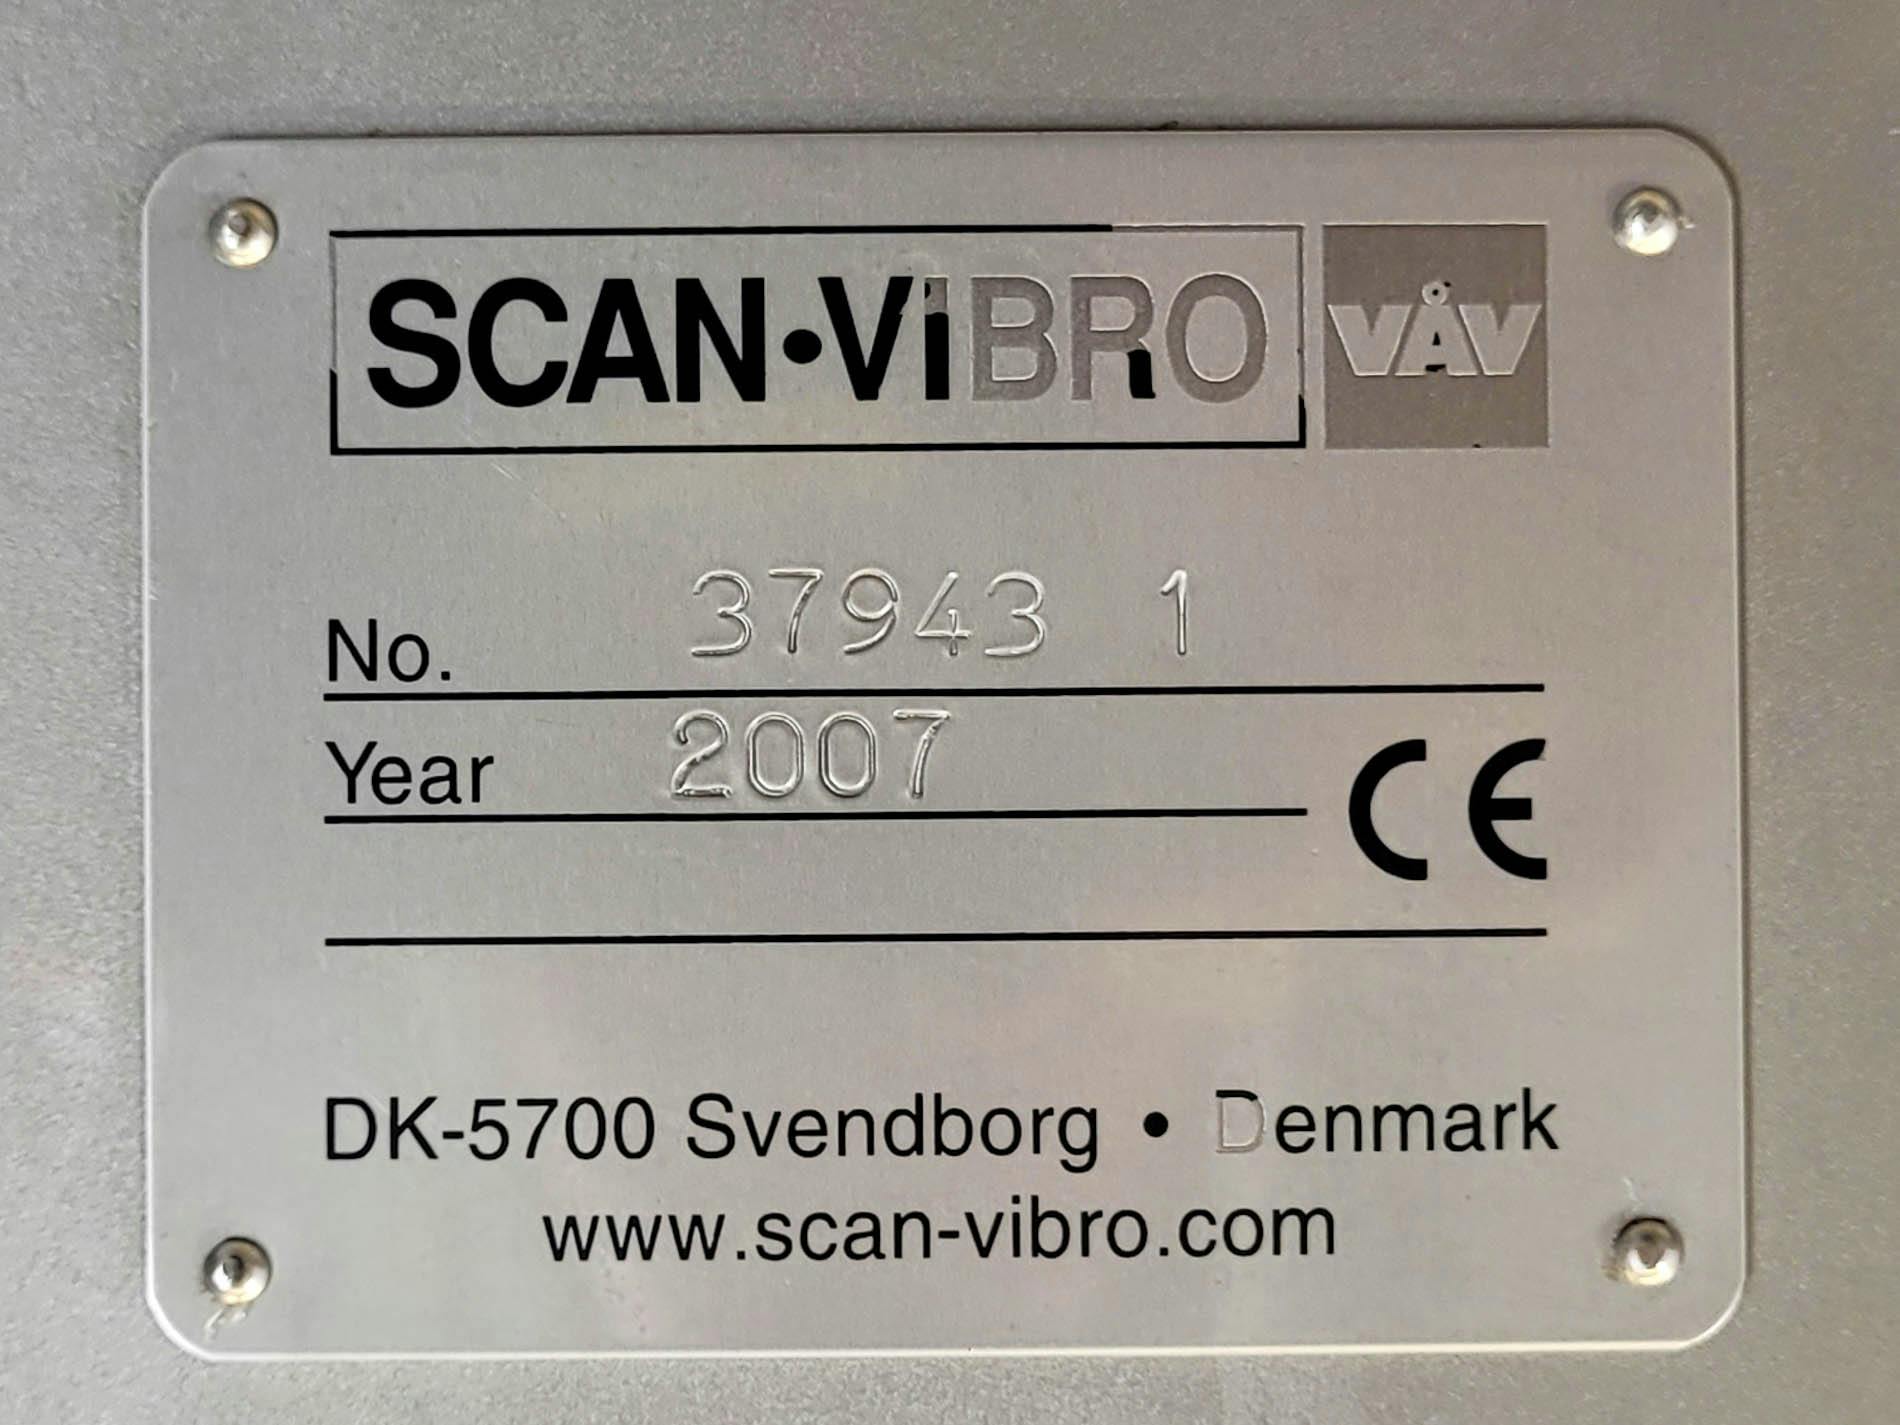 VAV Scan-Vibro TRS 300 x 1019 - Вибрационное подающее устройство - image 13